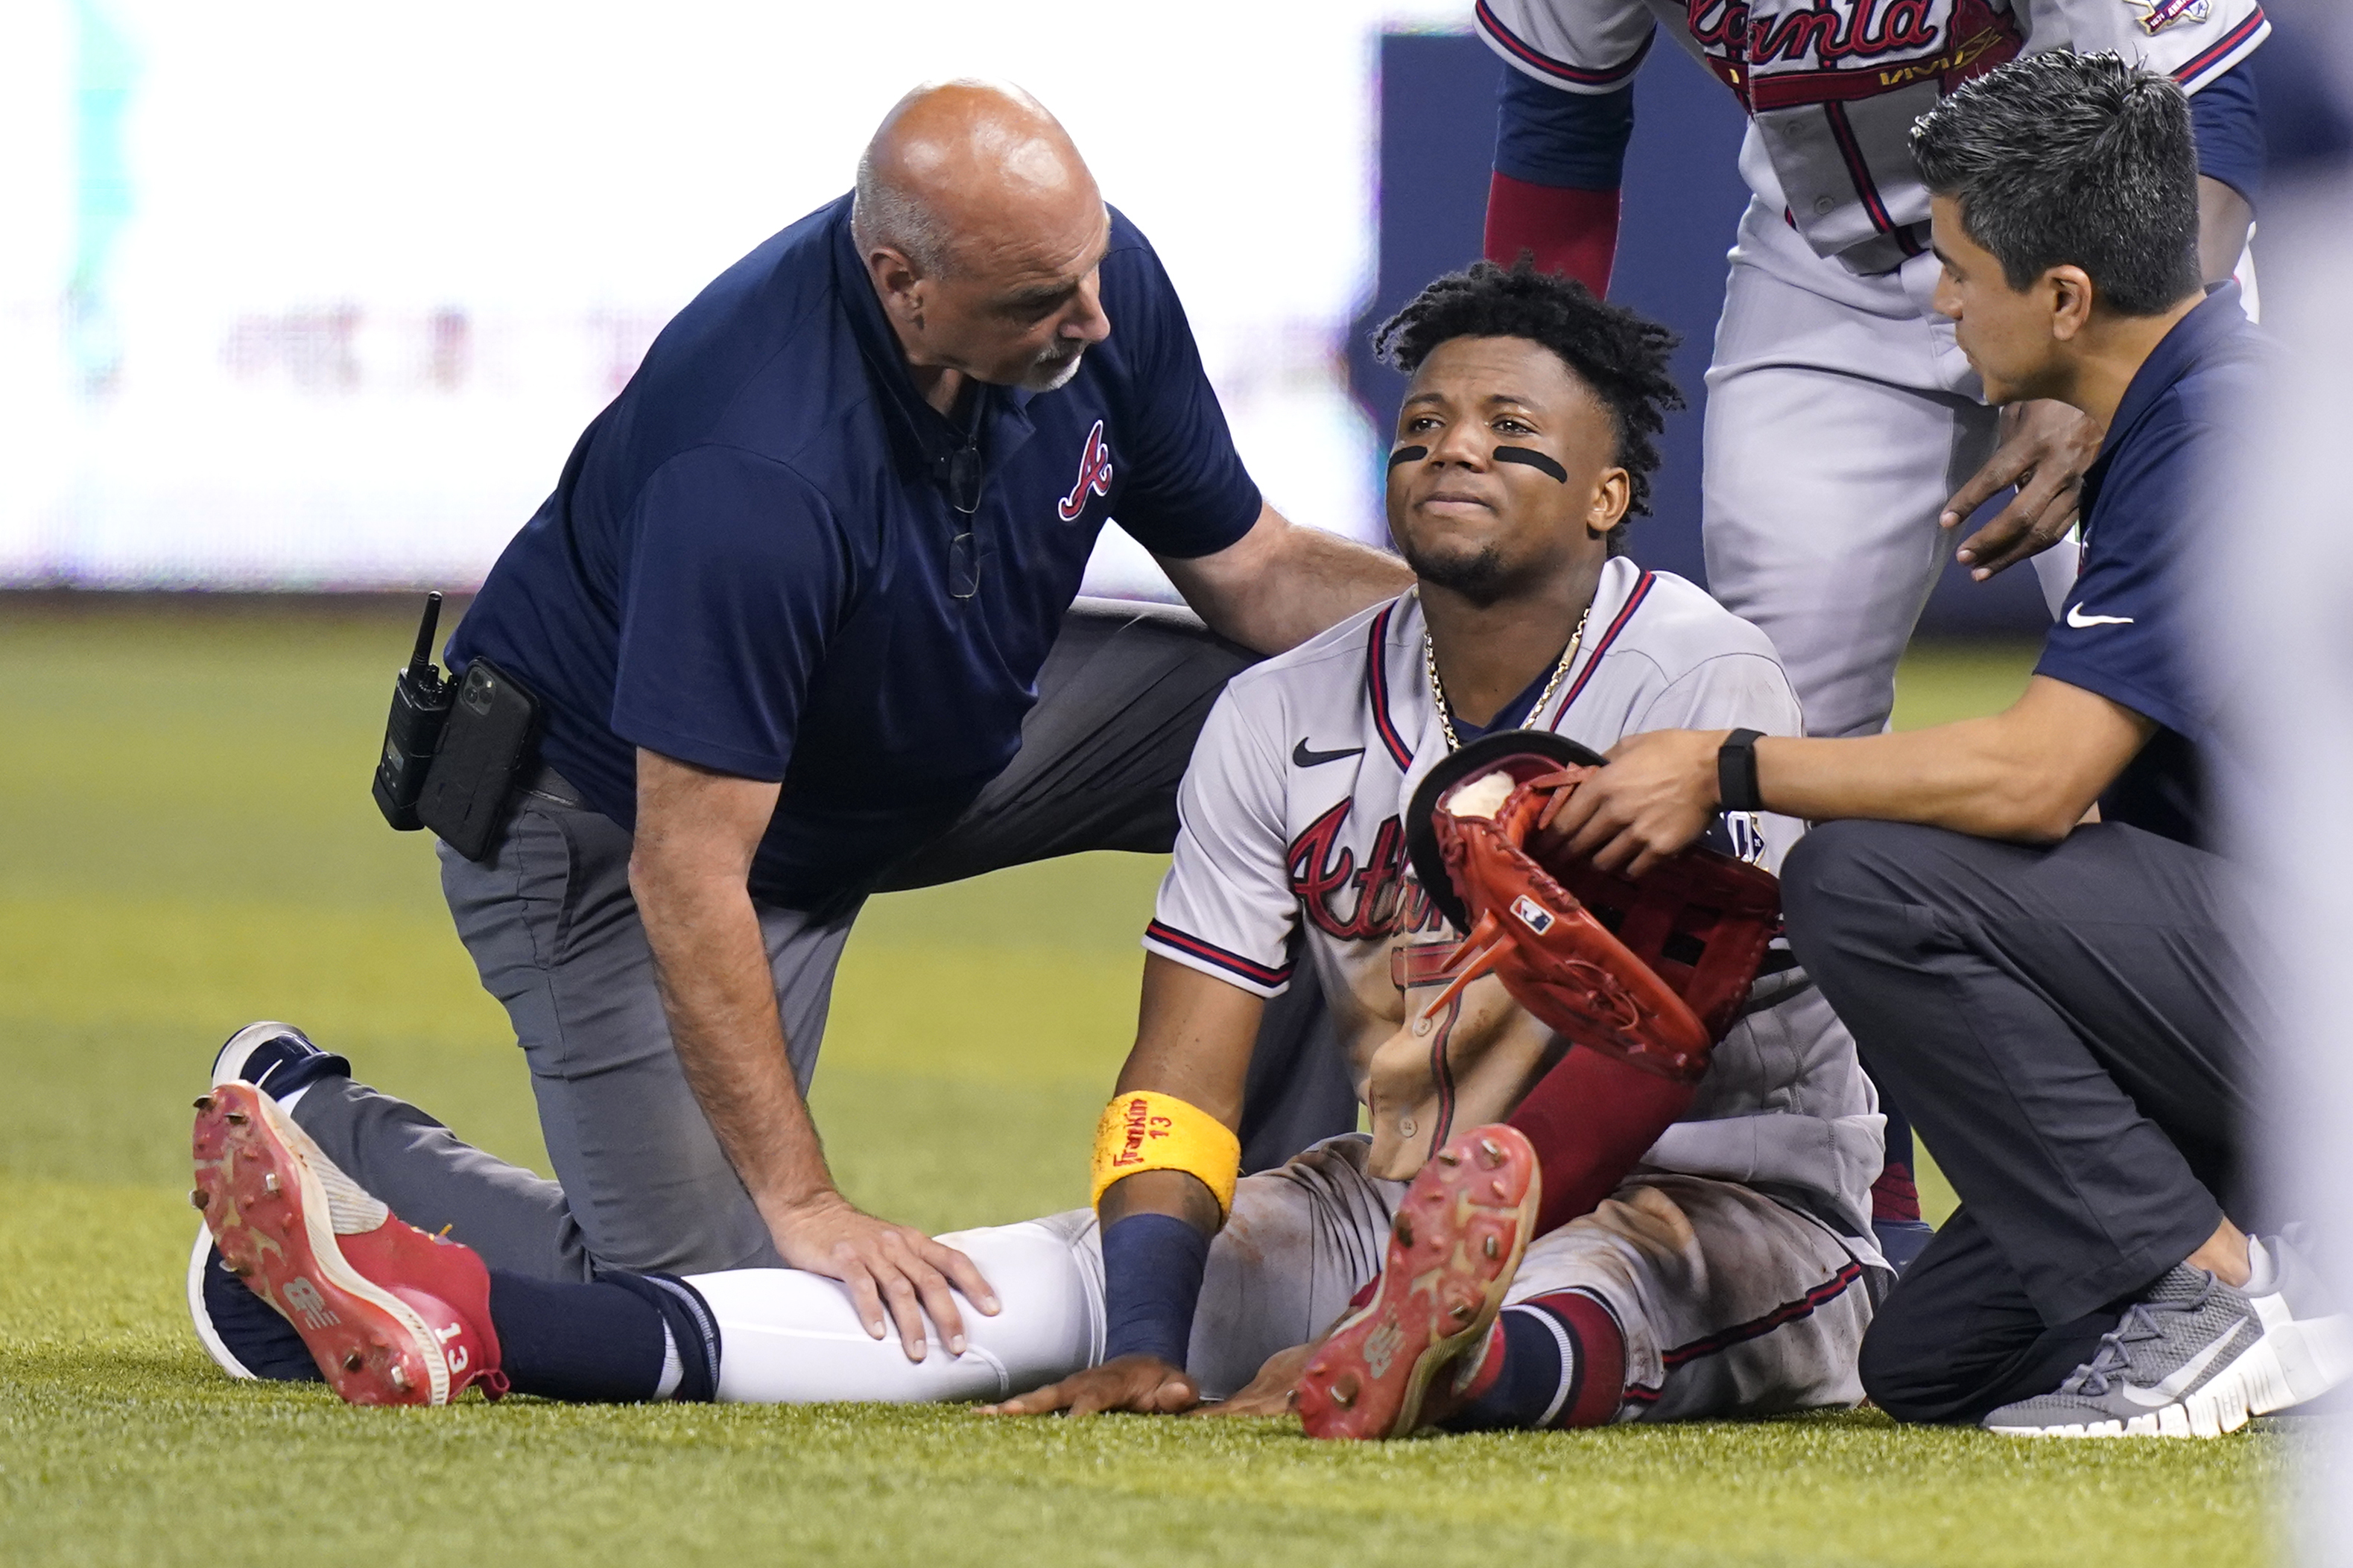 Ronald Acuña Jr. injury update: Braves OF avoids serious injury on